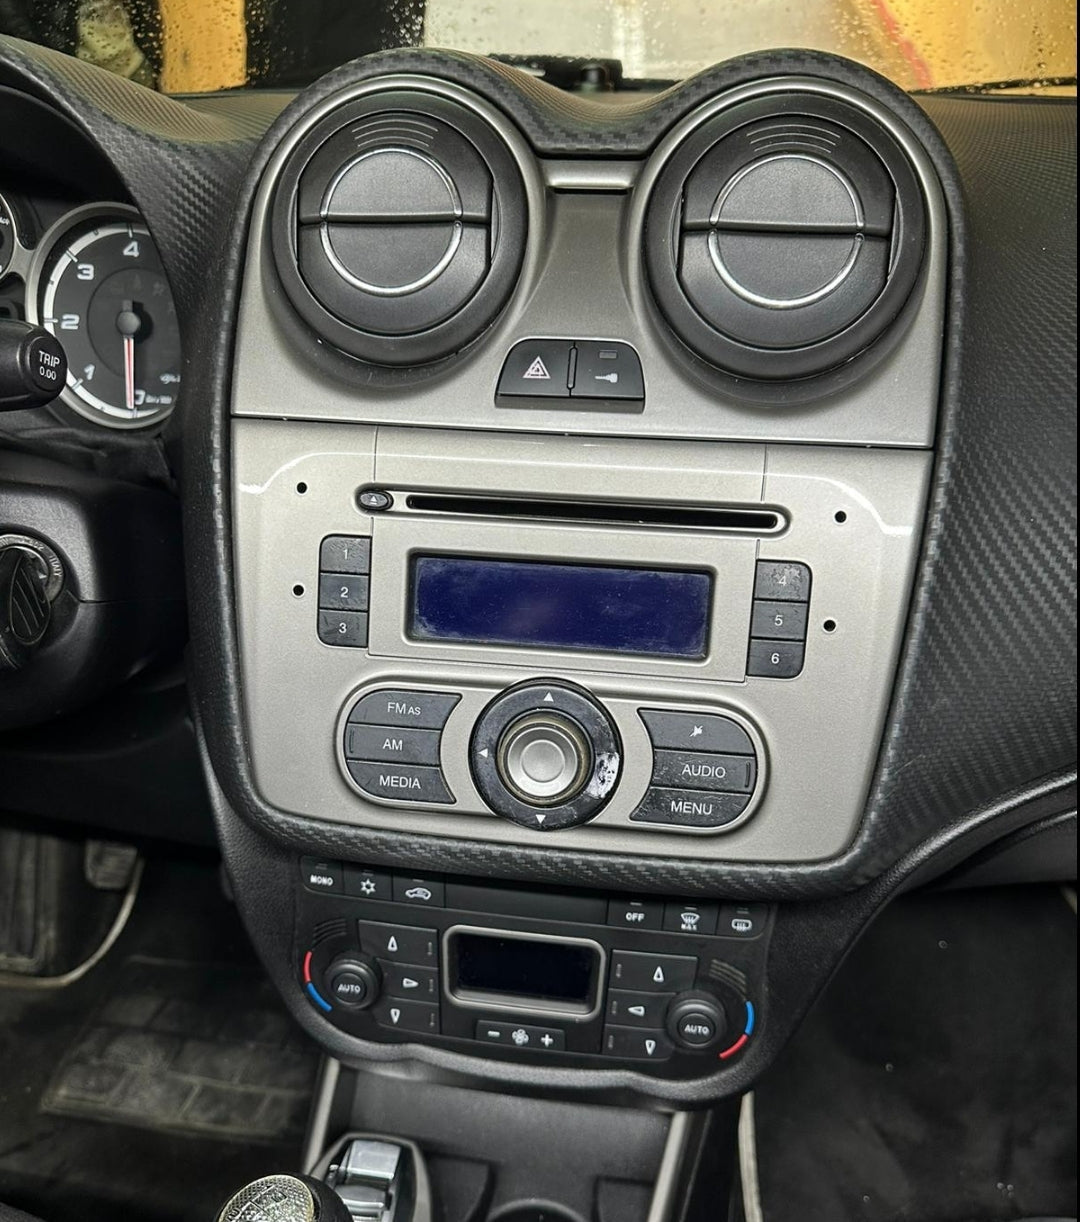 Autoradio per AlfaRomeo MITO [2008 - 2018] - Sistema auto Intelligente, 1Din 10"Pollici, GPS, Navigatore, Wifi